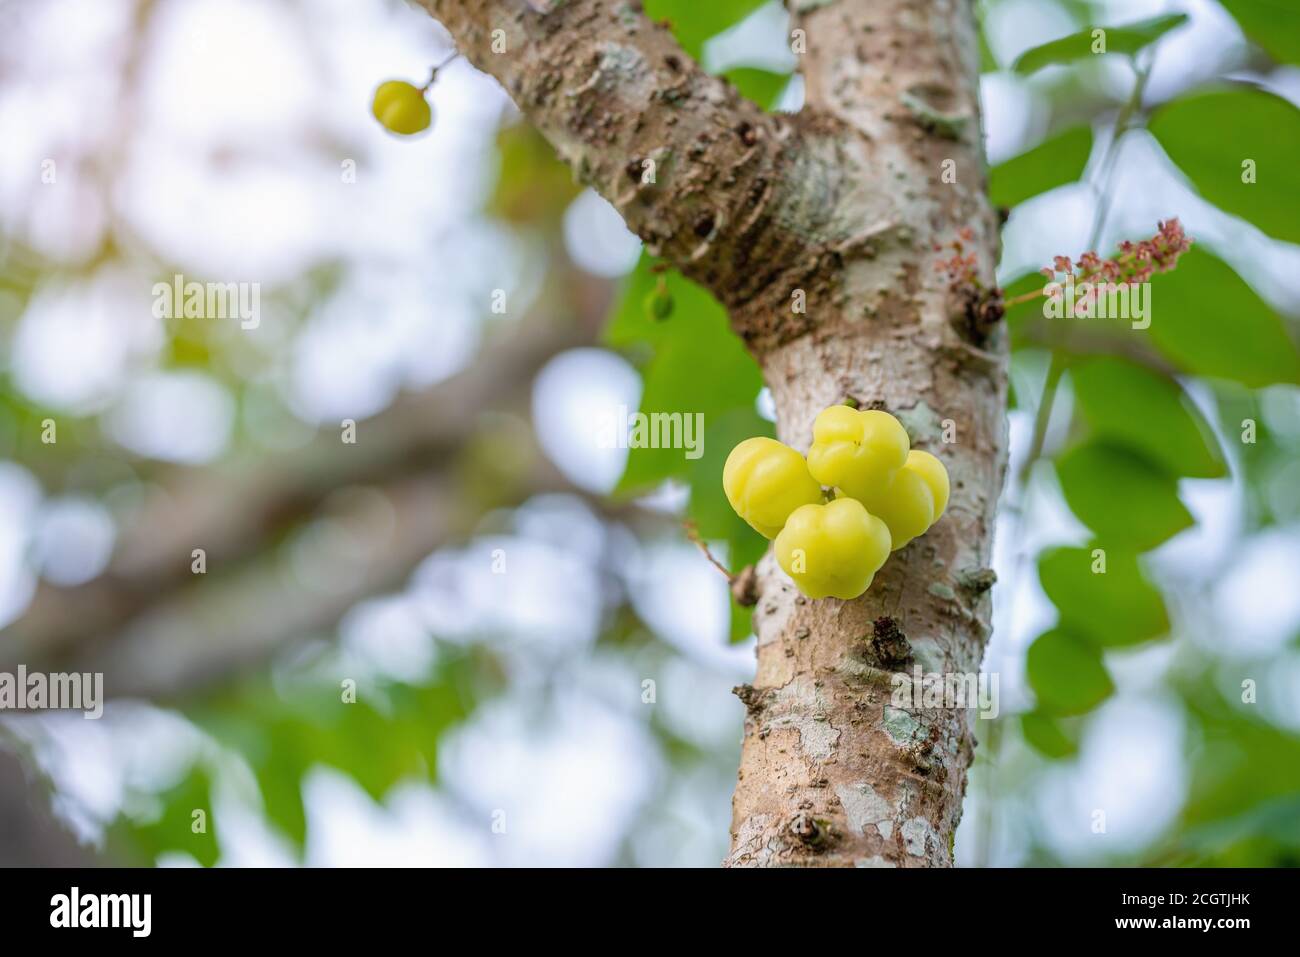 Star gooseberry, Phyllanthus (Phyllanthus acidus), on tree blurred bokeh background, Macro Stock Photo